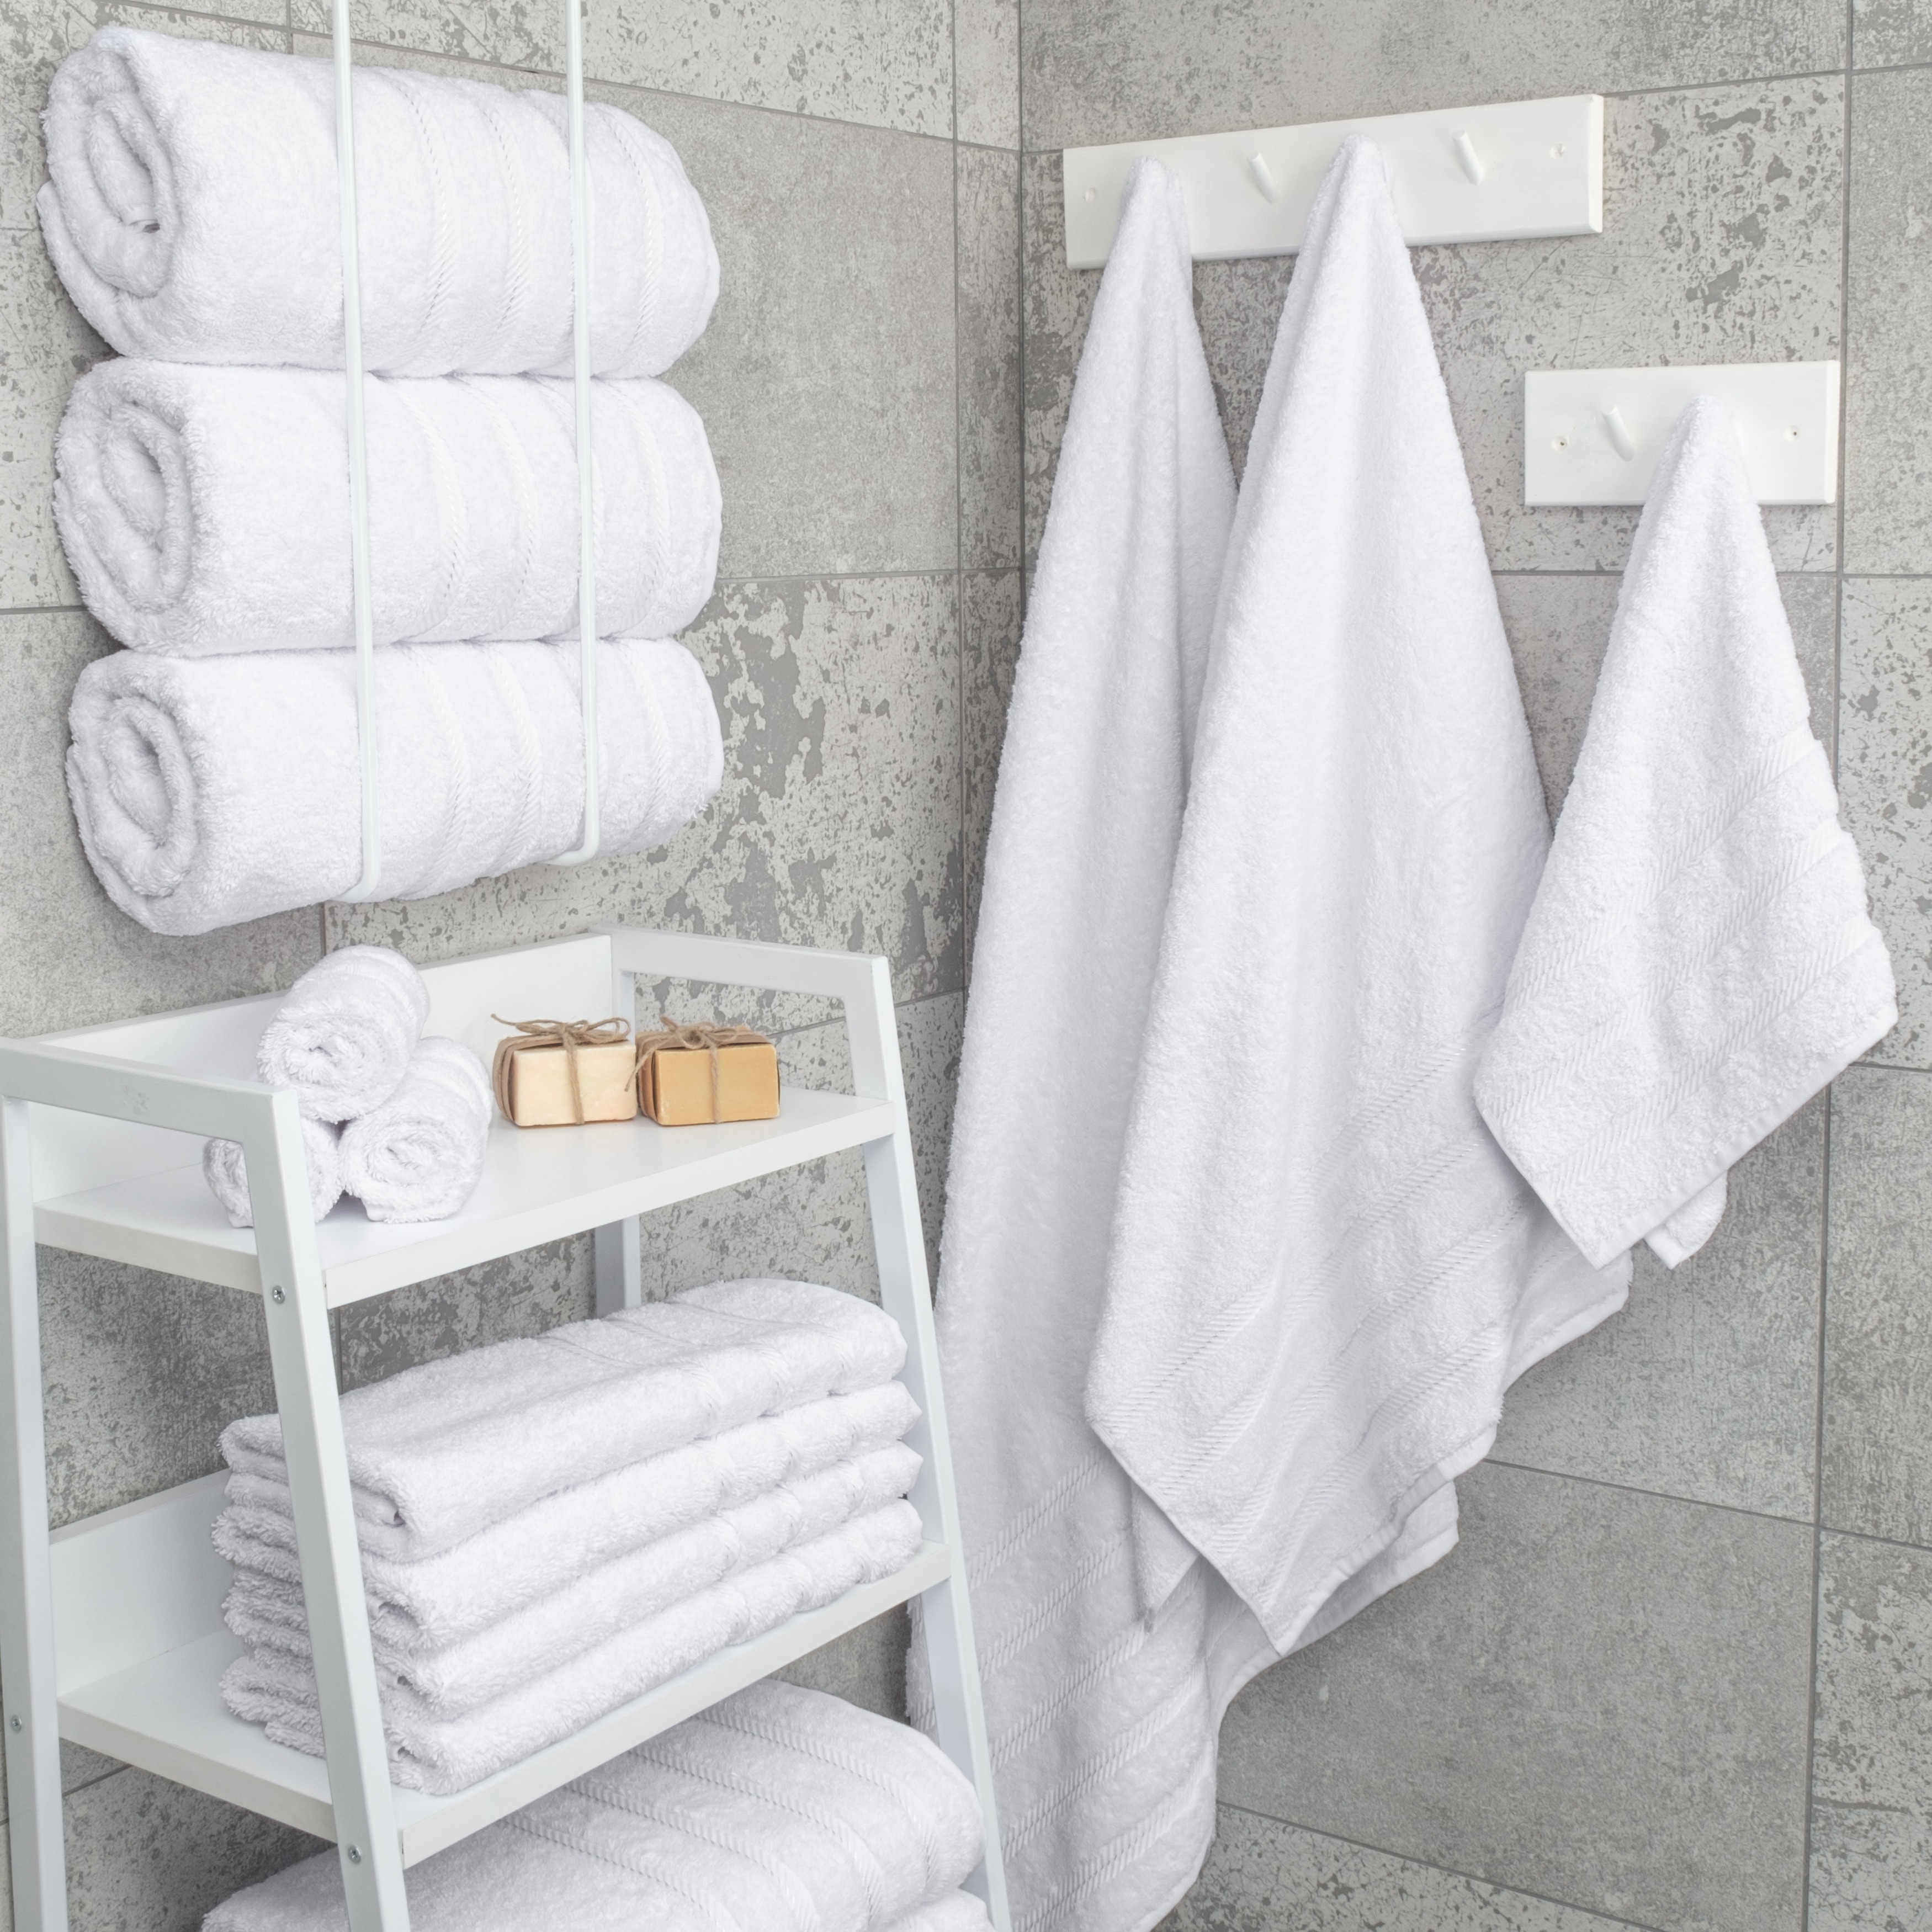 https://ak1.ostkcdn.com/images/products/is/images/direct/8c1c8057826750fd3dadccec130bbfb455248309/American-Soft-Linen-Turkish-Cotton-4-Piece-Bath-Towel-Set.jpg